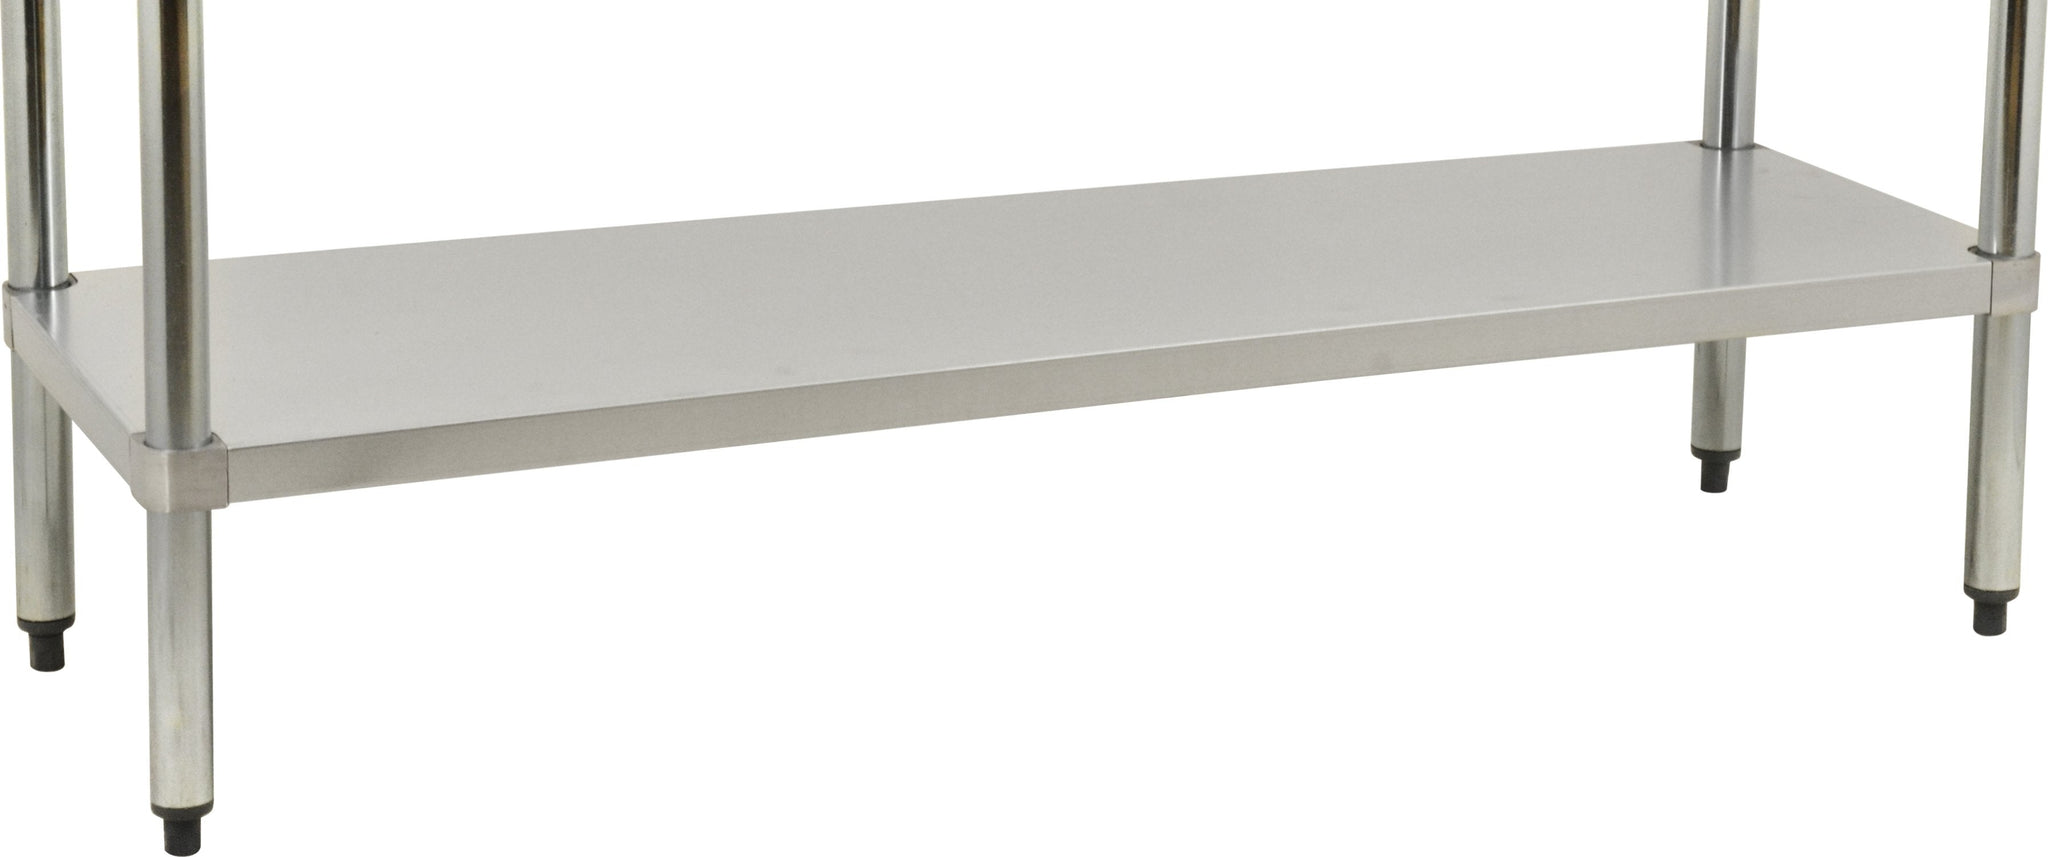 Omcan - 24” x 96” Stainless Steel Undershelf For Work Table - 21614